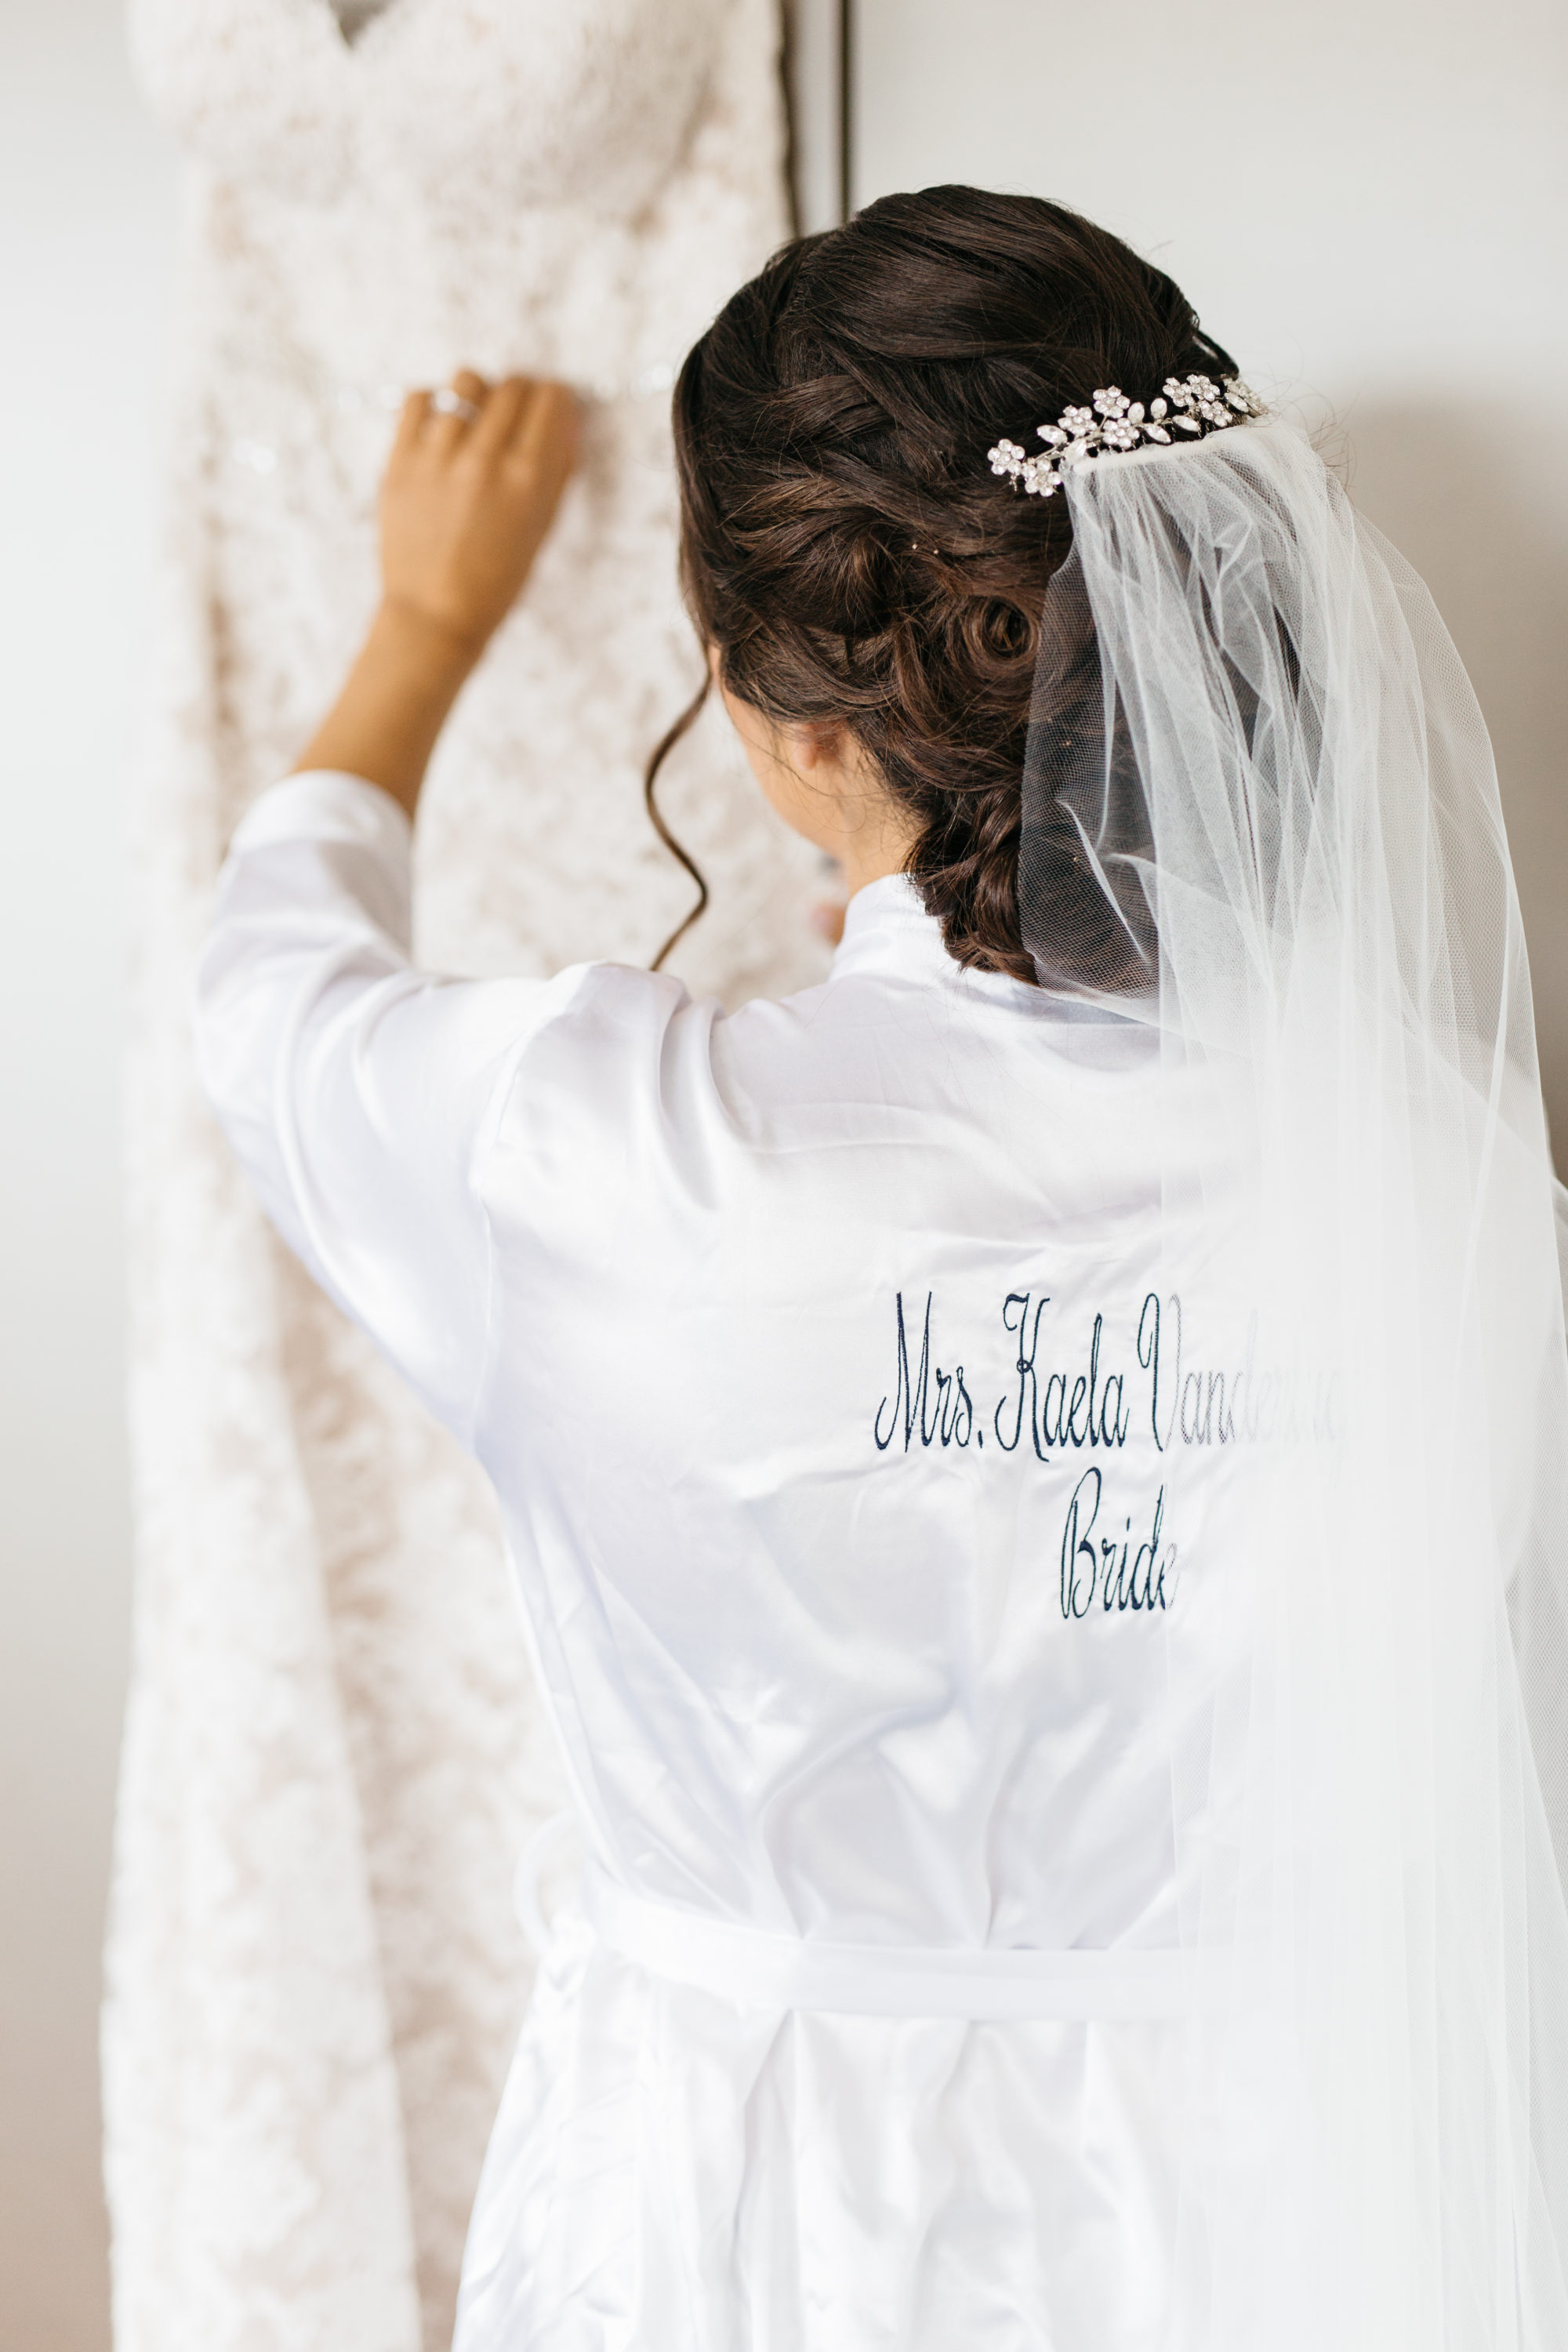 Bride looking at her Reem Arca Wedding gown